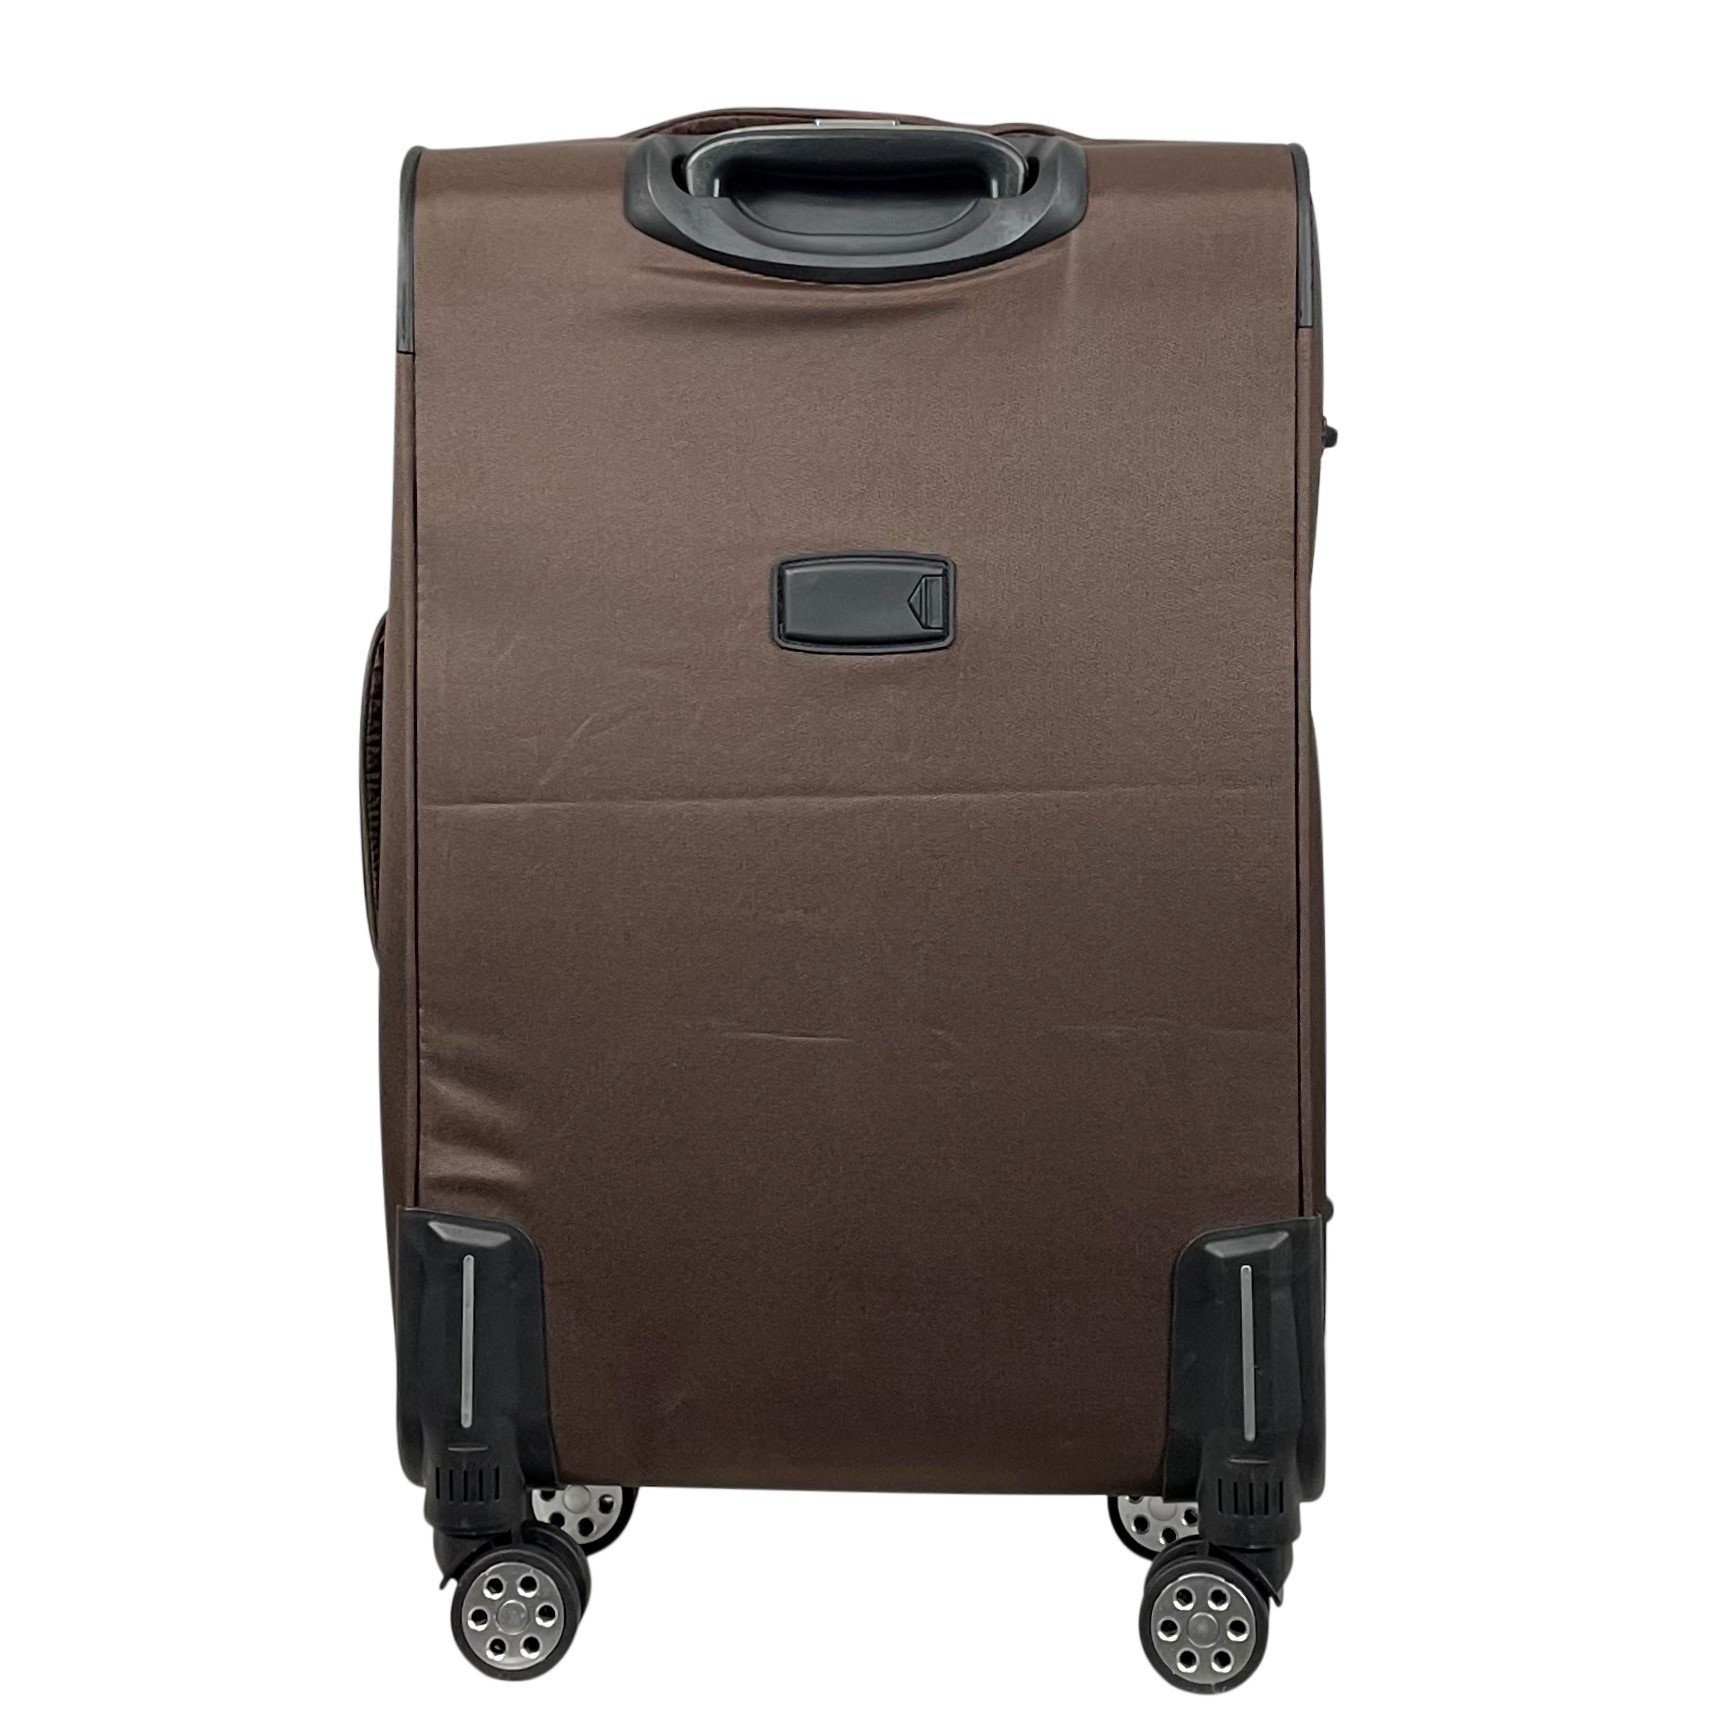 Braun Koffer MTB erweiterbar Stoffkoffer (M/L/XL/XXL/Set) Reisekoffer Zwillingsrollen